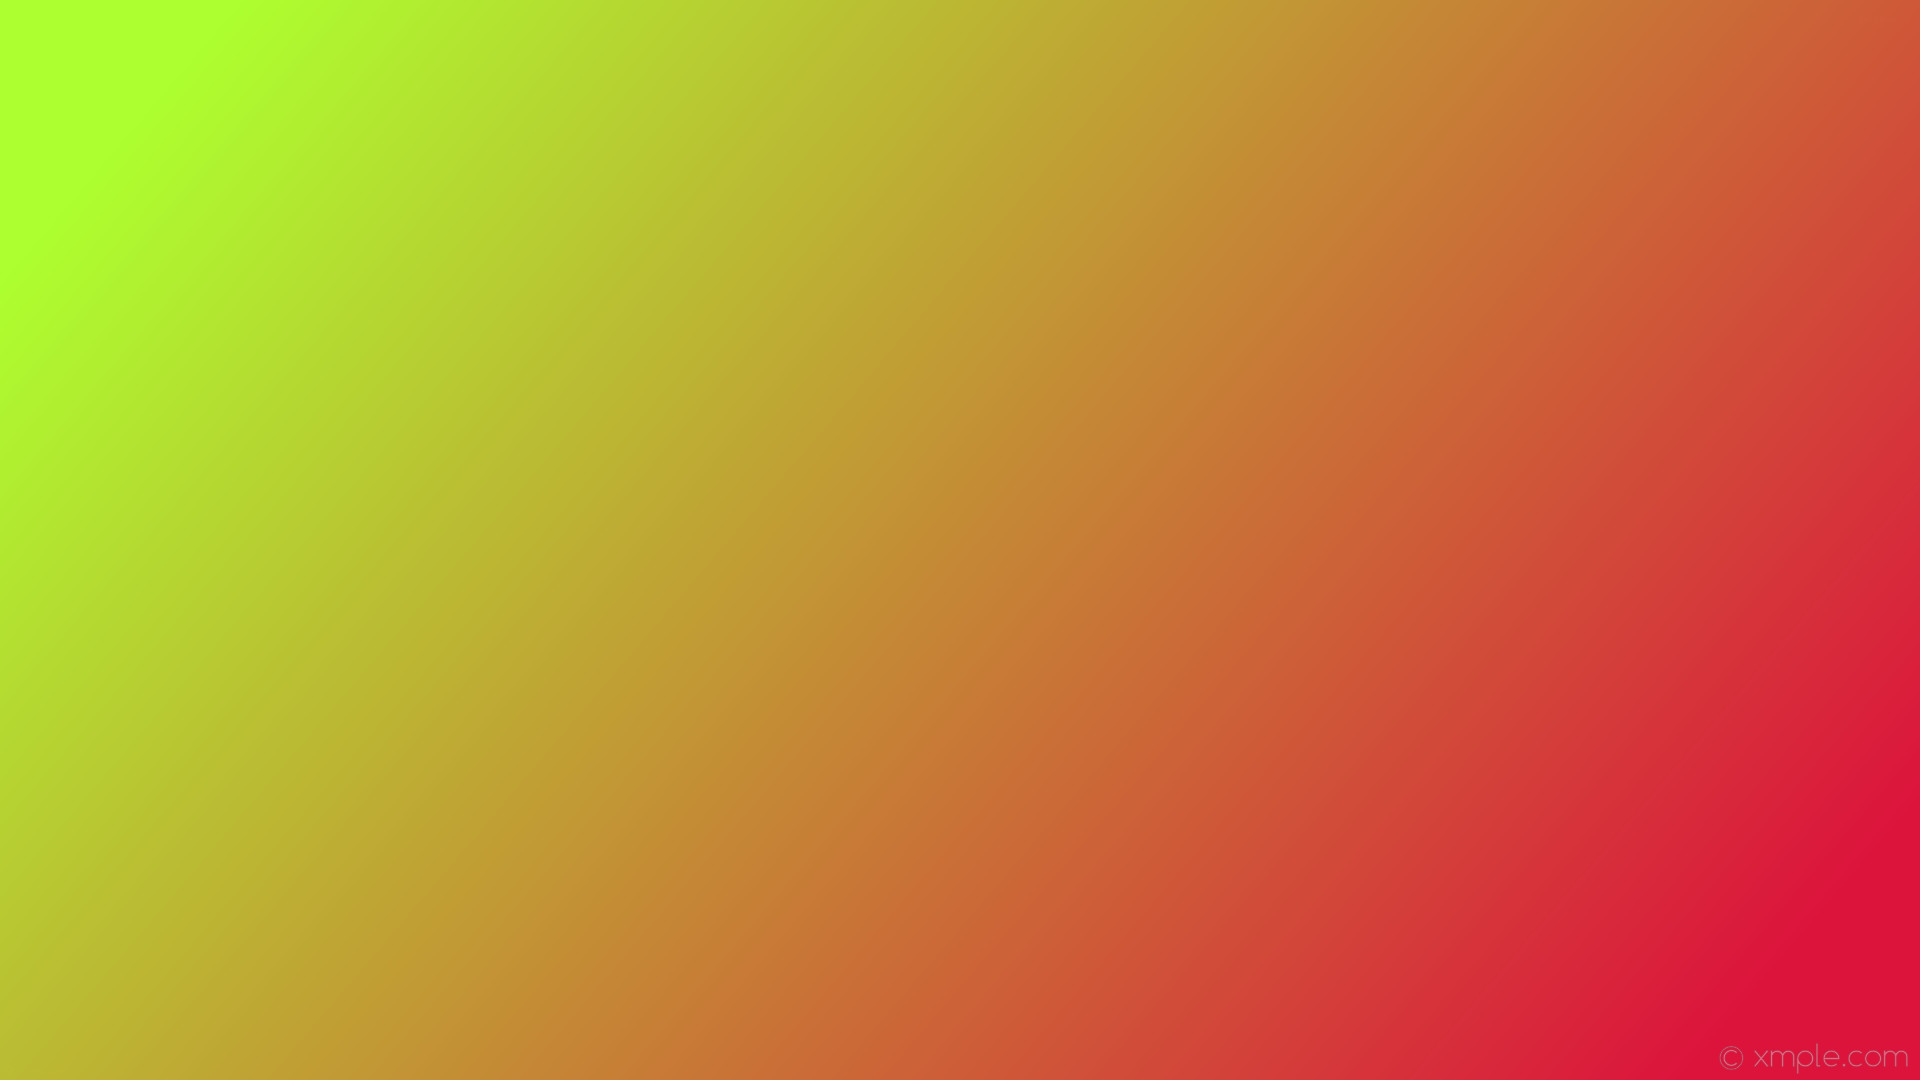 1920x1080 wallpaper linear red gradient green crimson green yellow #dc143c #adff2f  345Â°